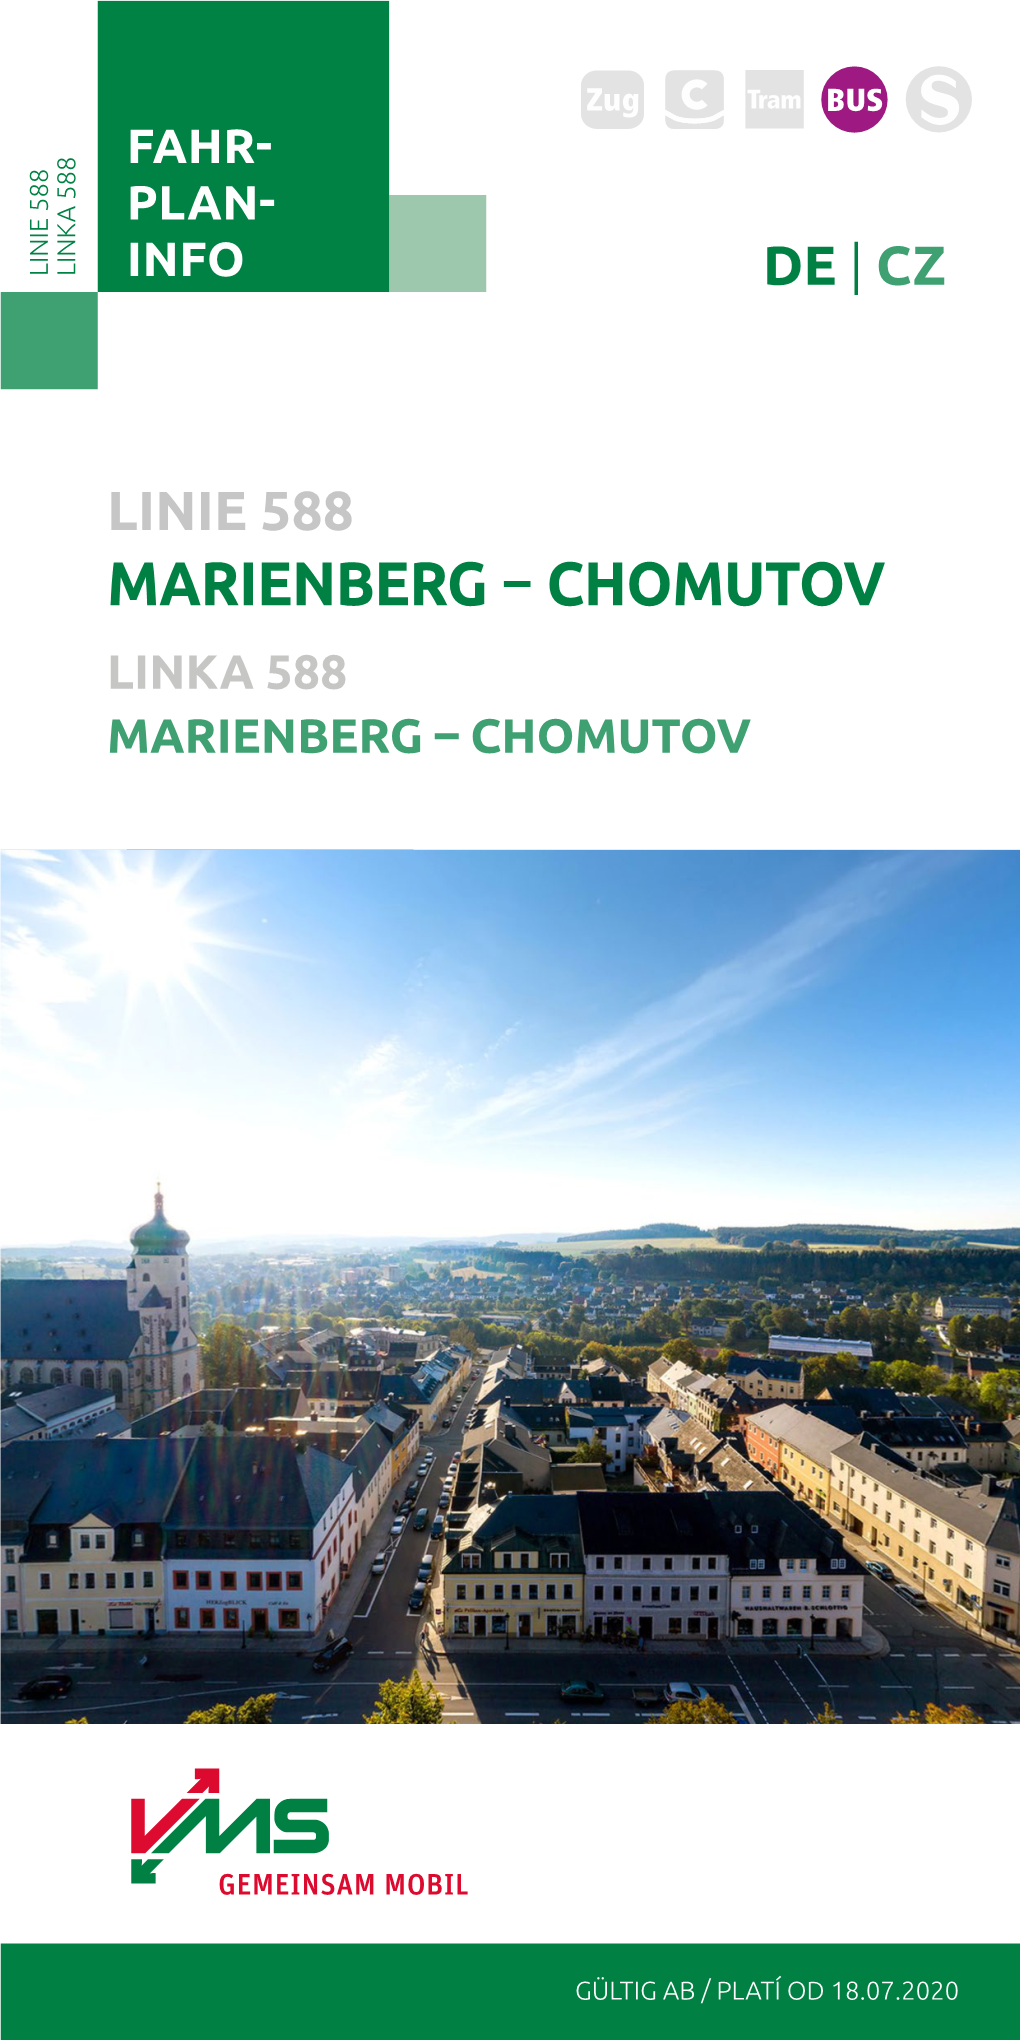 Marienberg – Chomutov